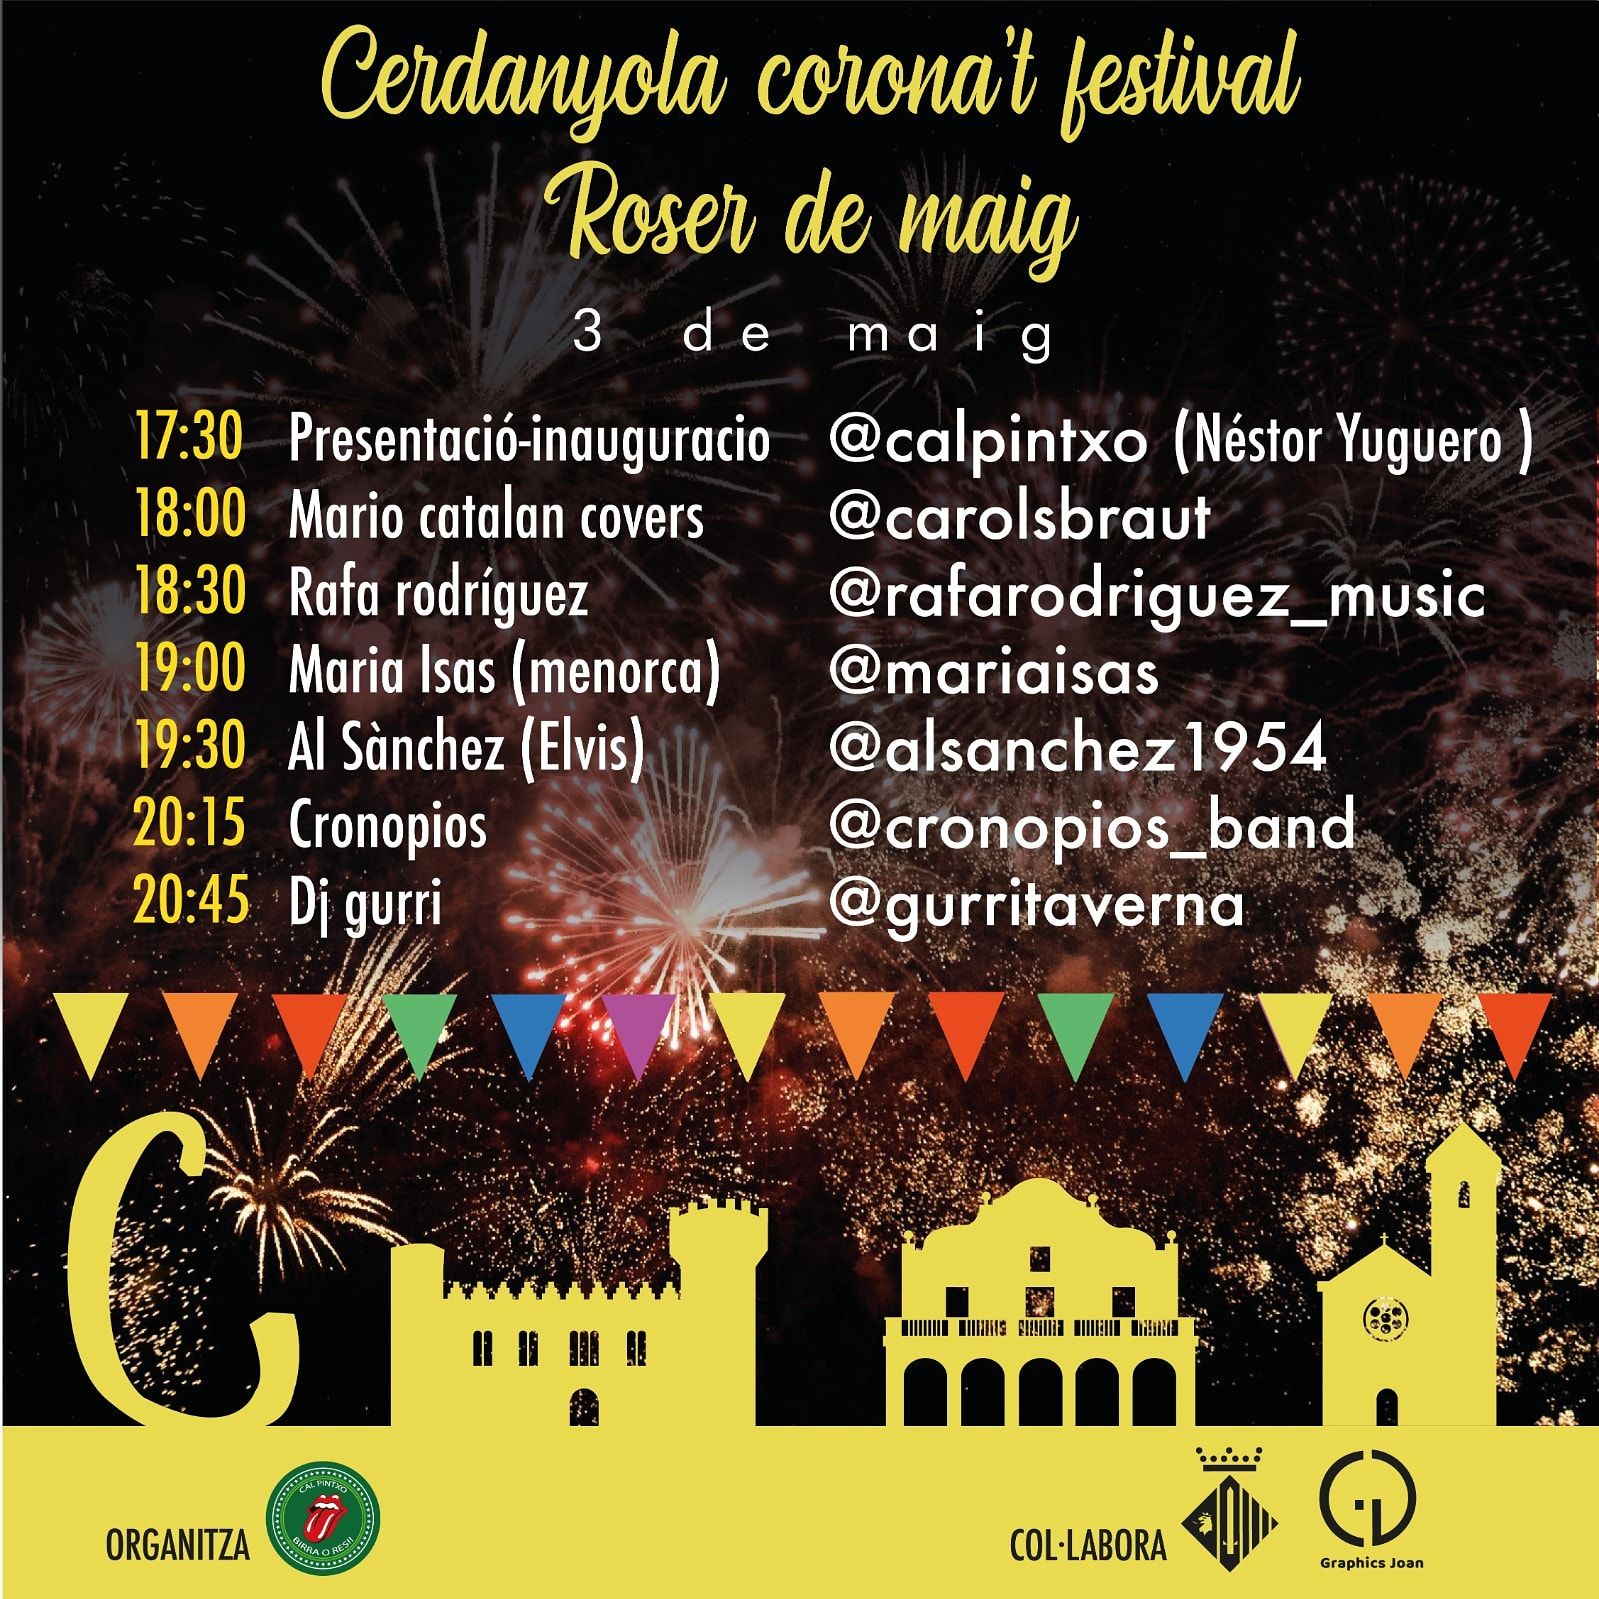 Cartell del 2n Cerdanyola Corona't Festival